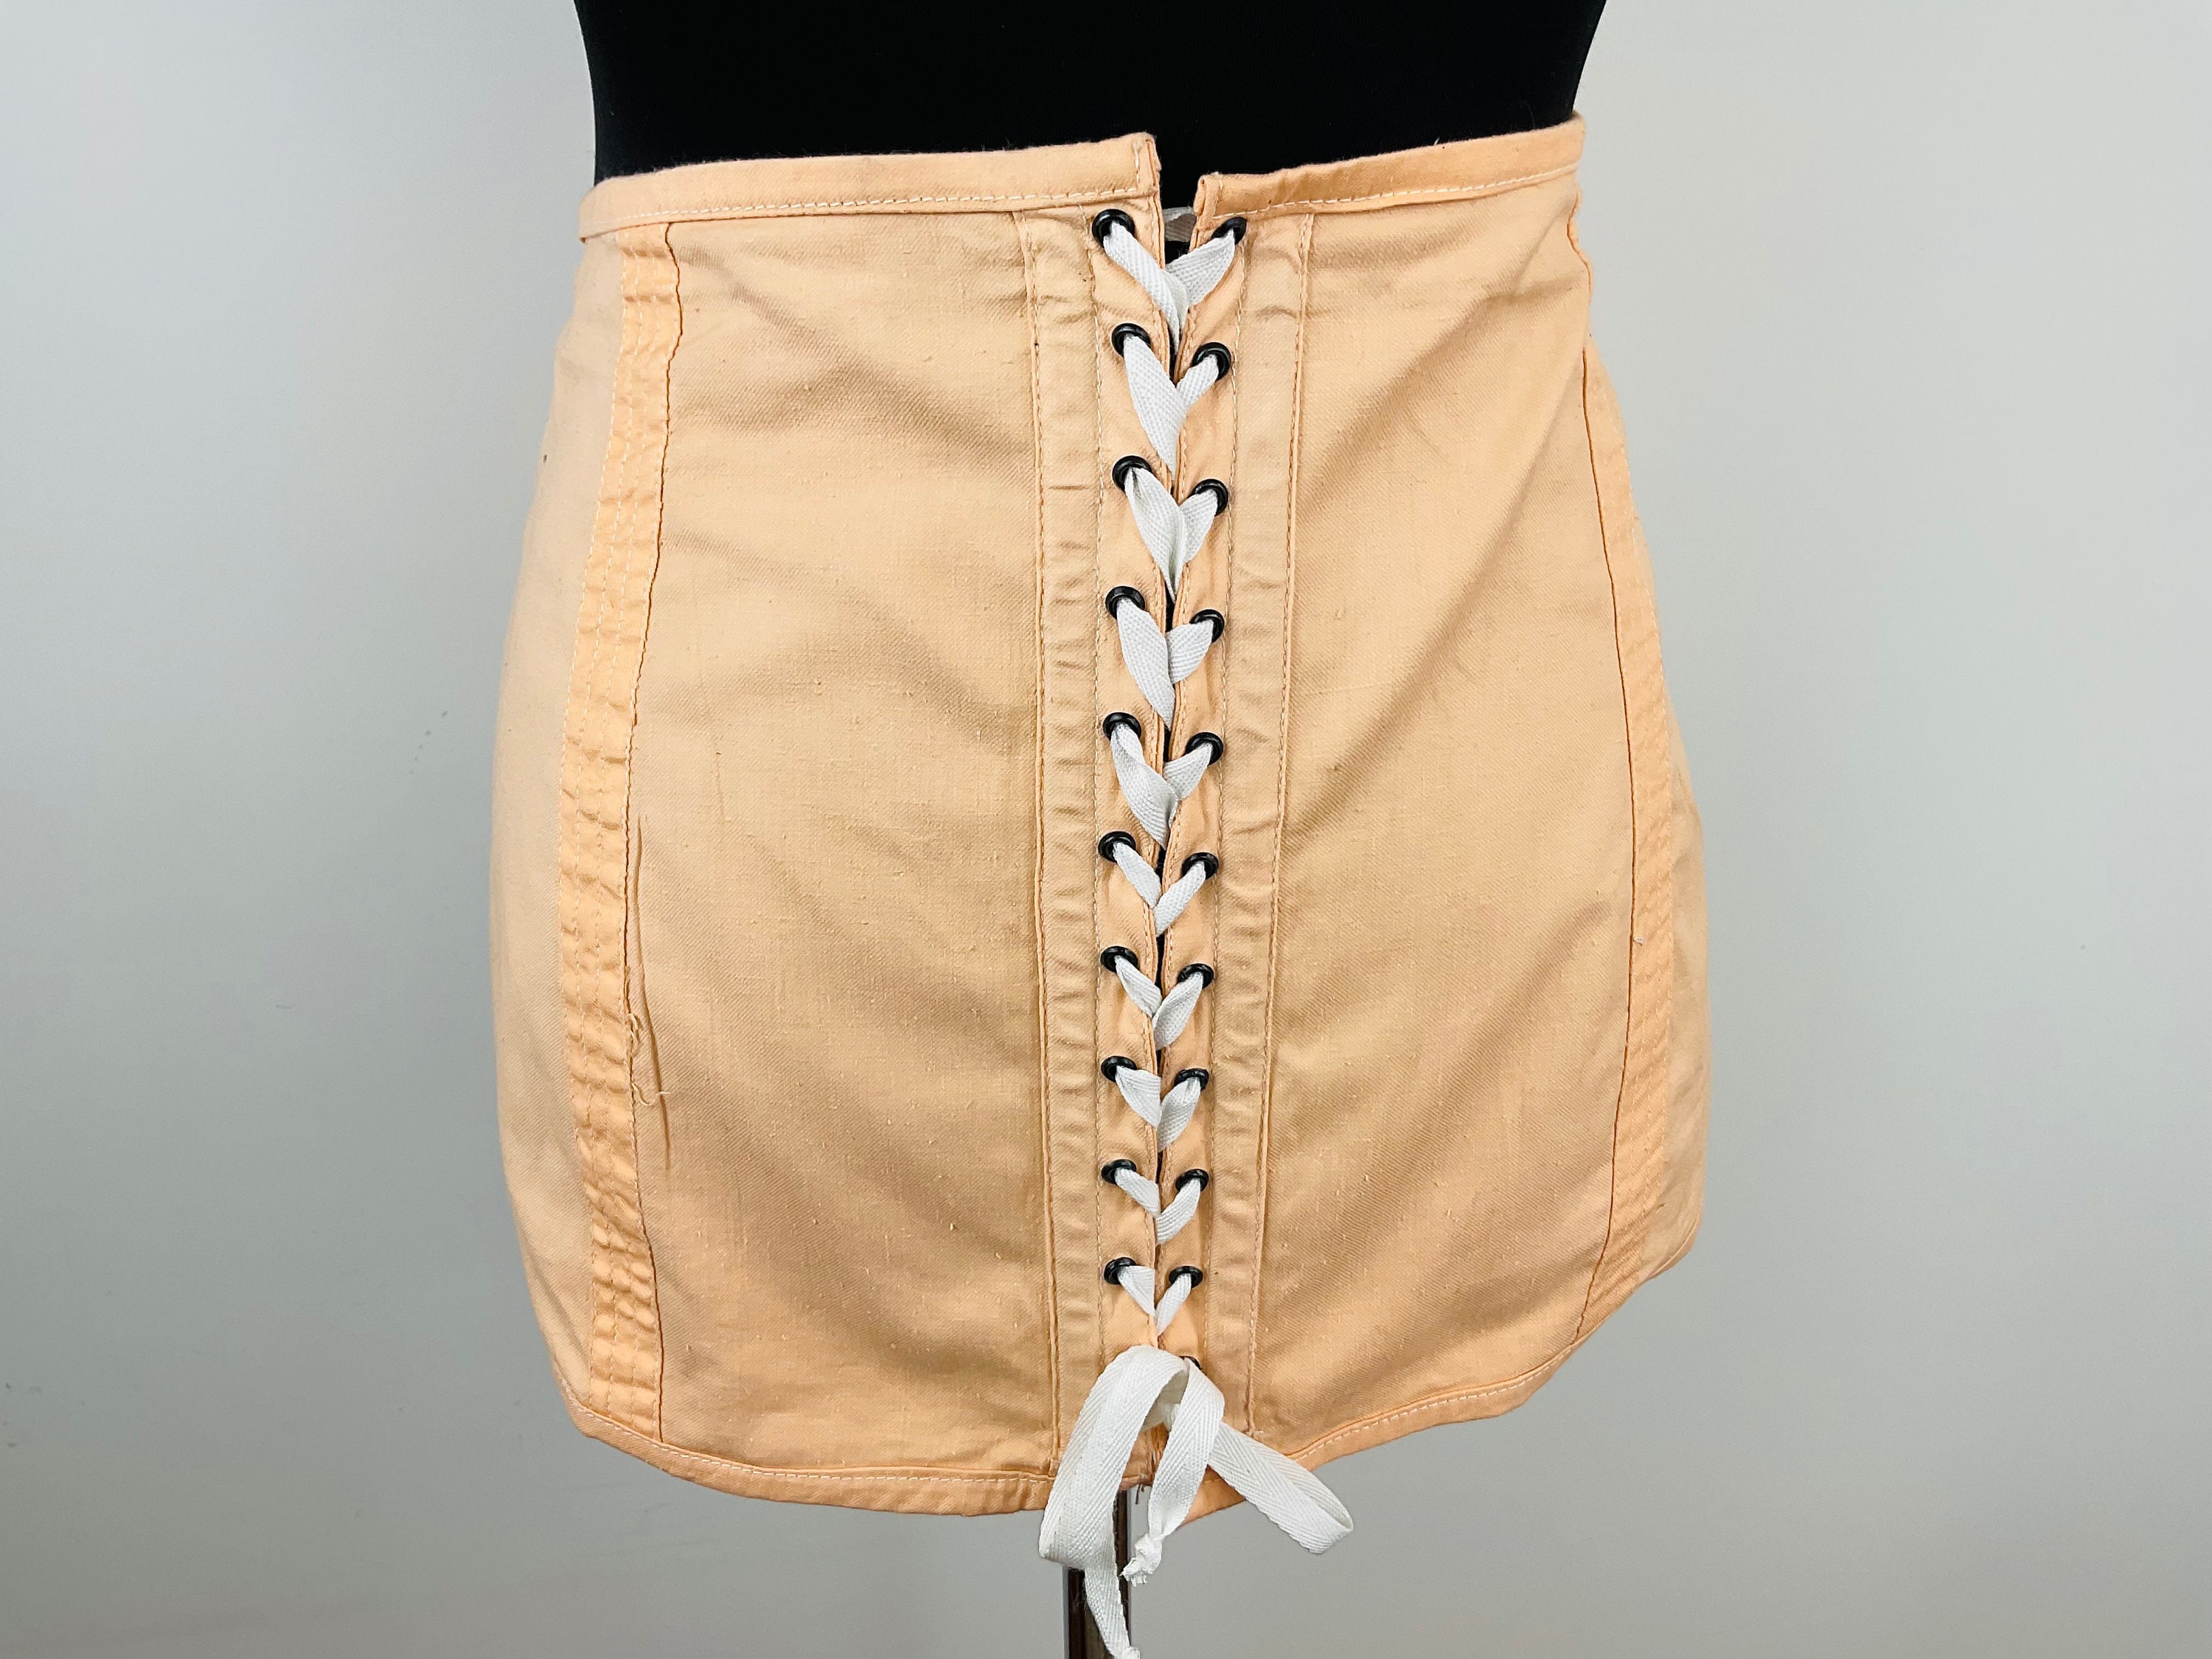 Antique French Corset Apricot Cotton Laced Girdle Underwear Size L 